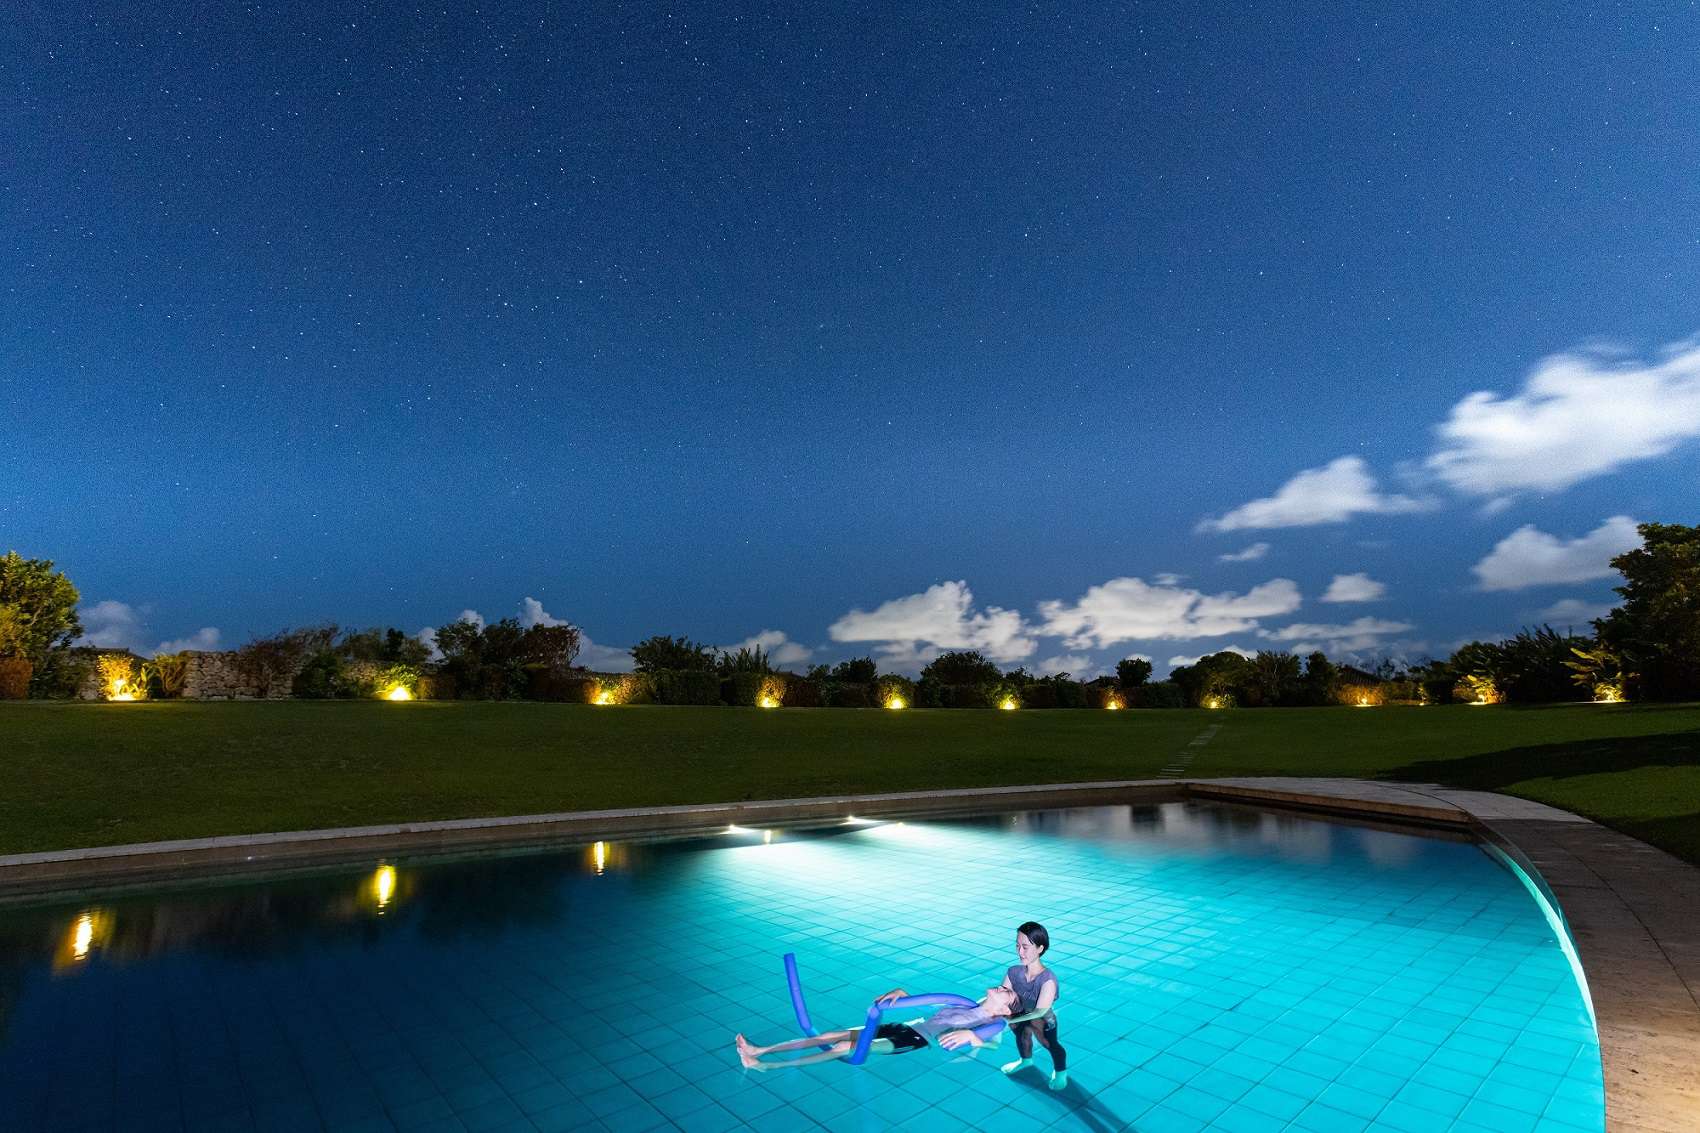 Ryokotomo - 1653316845 950 c2f68404 hoshinoya taketomi island offering relaxing starry sky plan for a